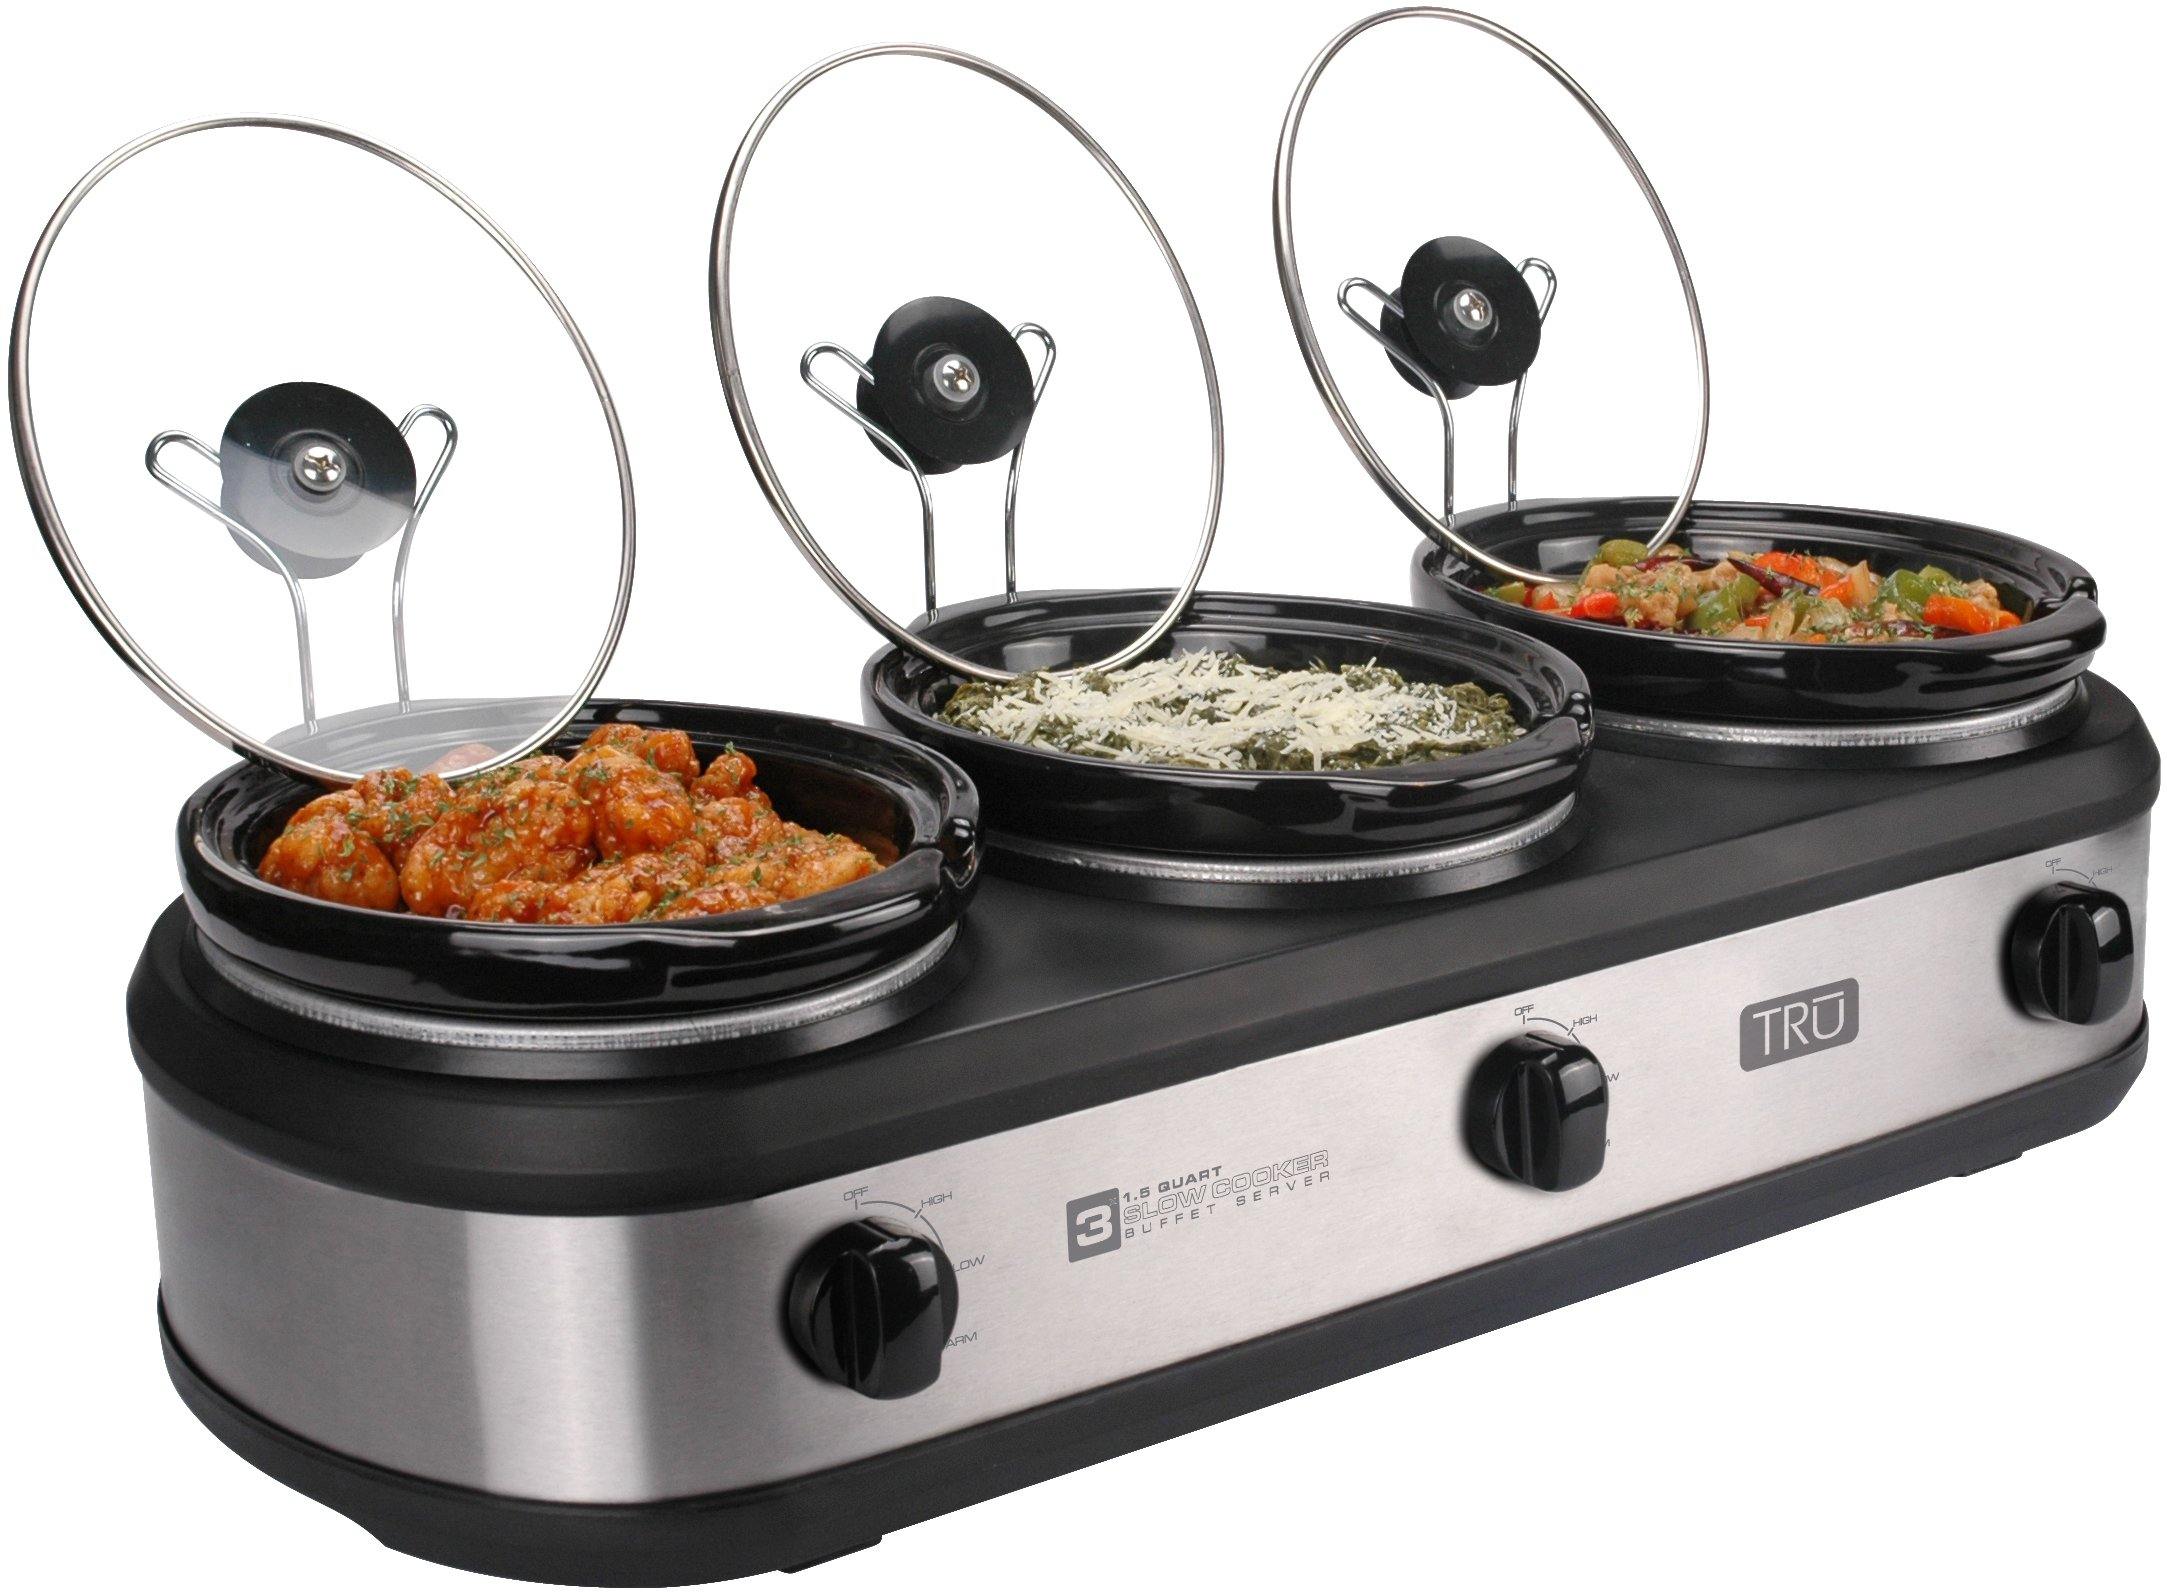 GE Triple Slow Cooker Buffet Server - 3 Pot Food Warmer - Cookers